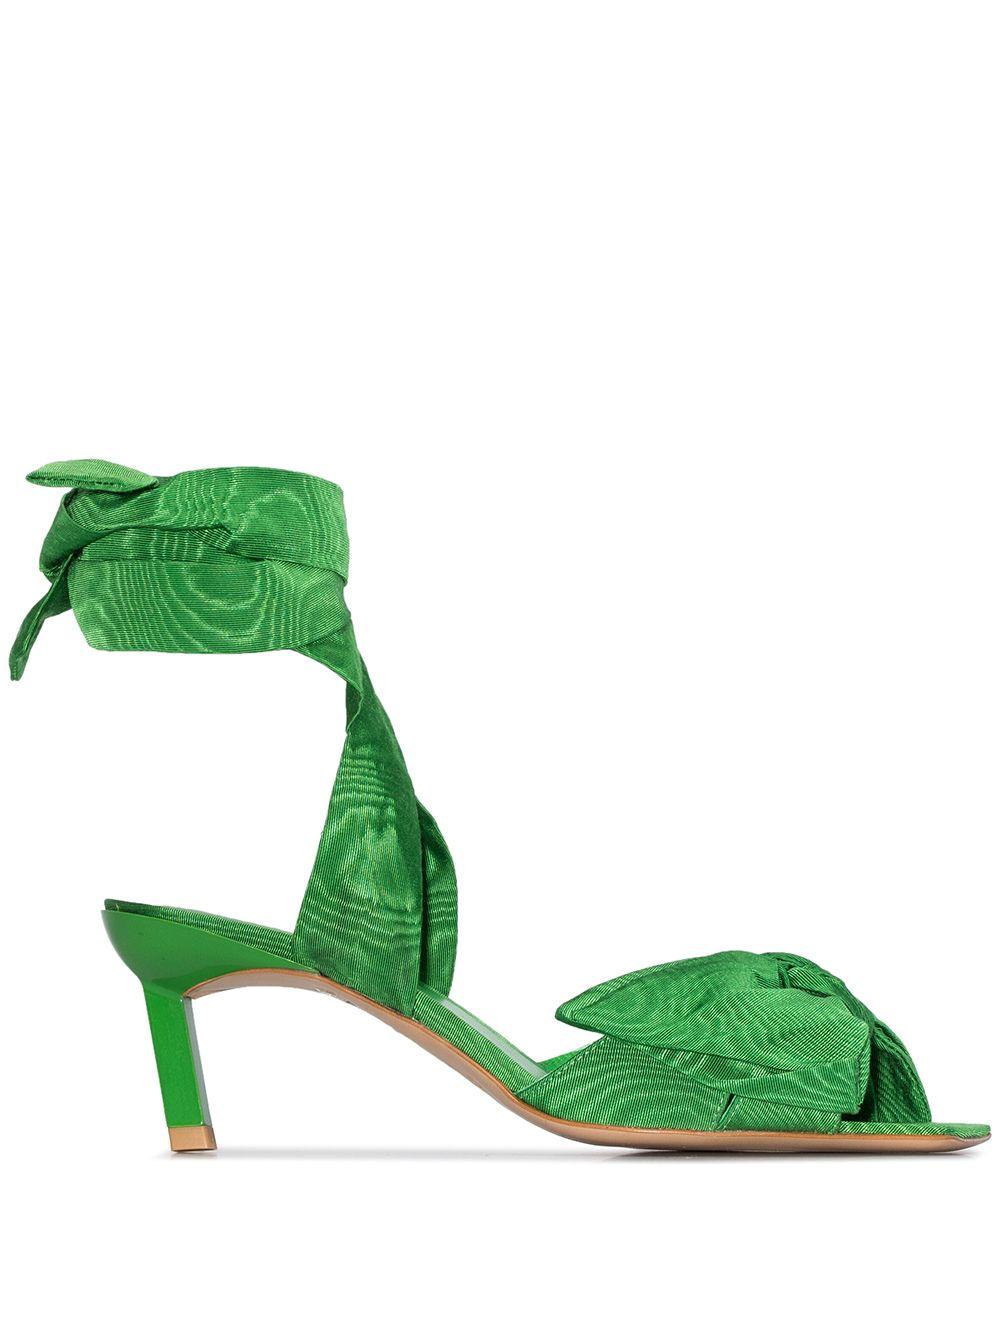 Ganni 65 Bow Tie Sandals in Green | Lyst